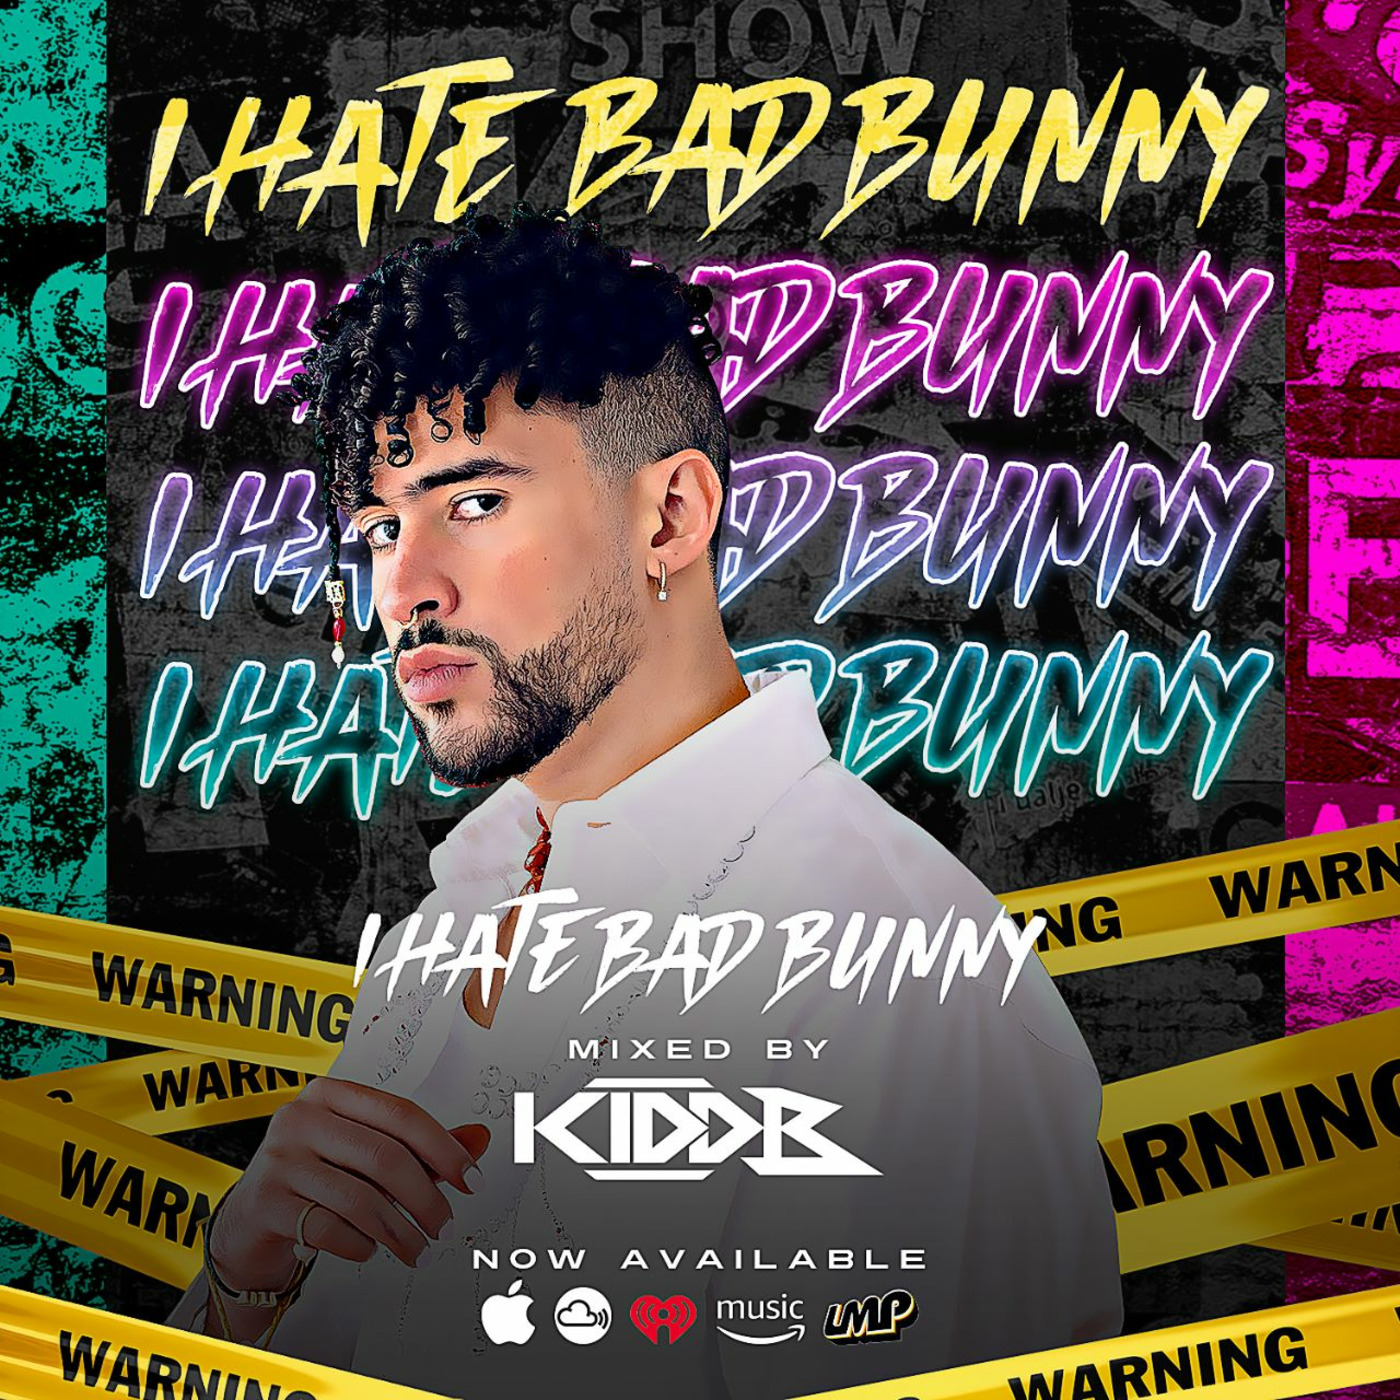 Episode 19: Kidd B Presents: I Hate Bad Bunny